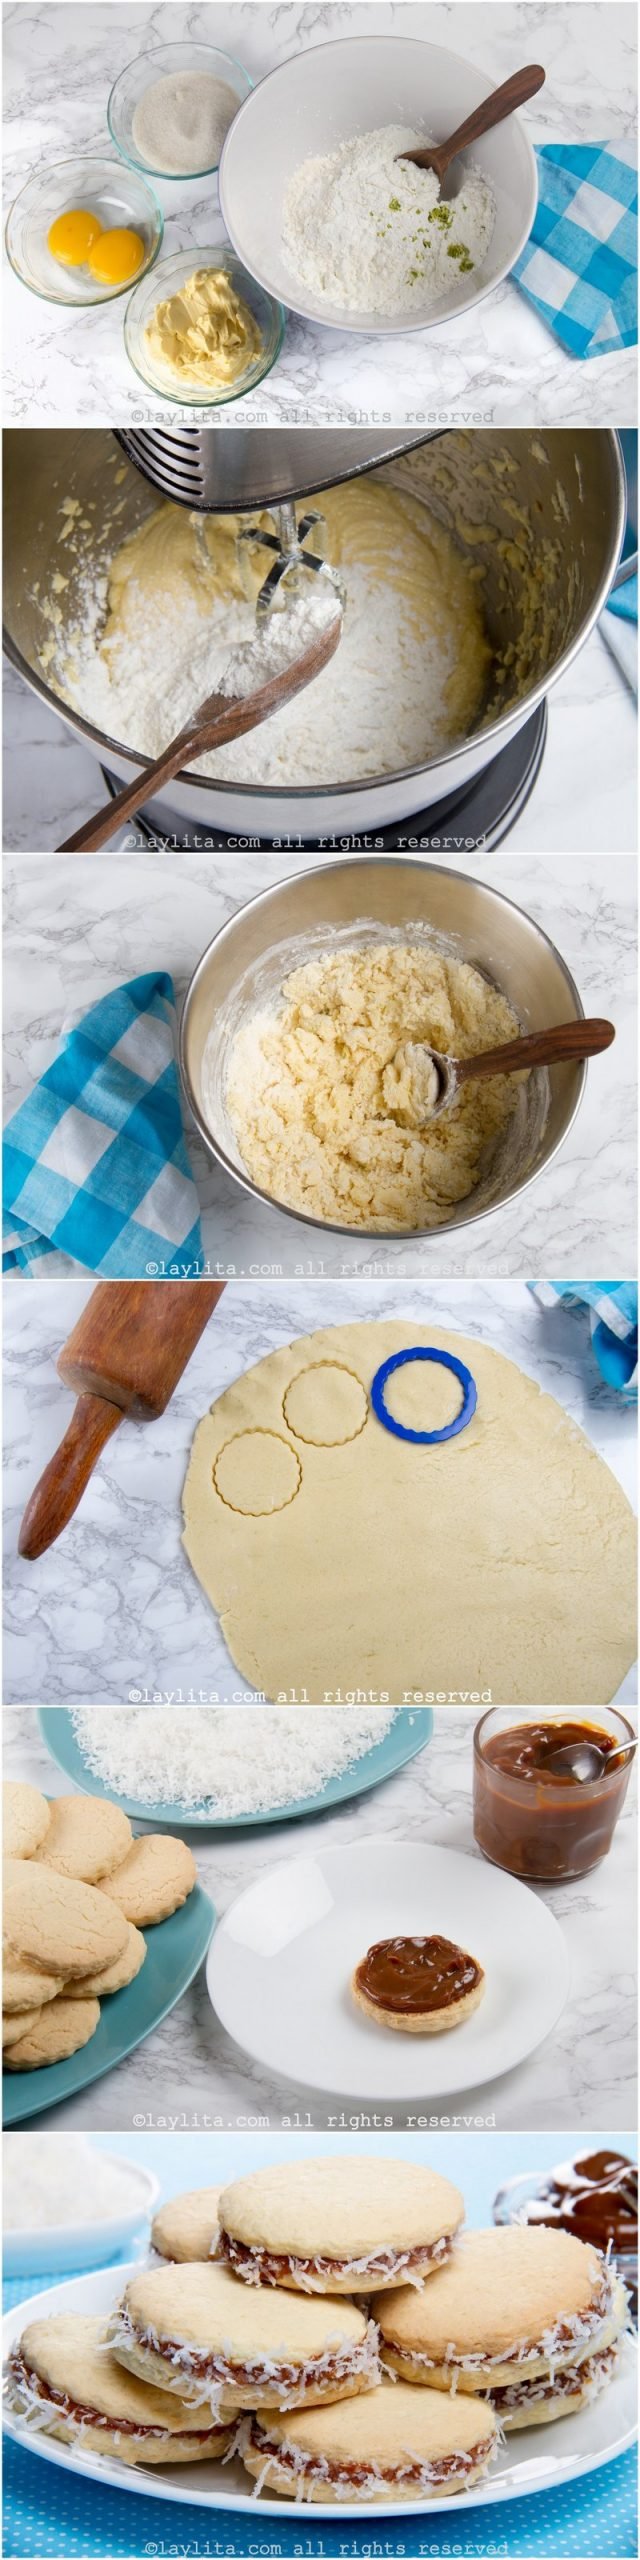 How to make alfajores dulce de leche cookies